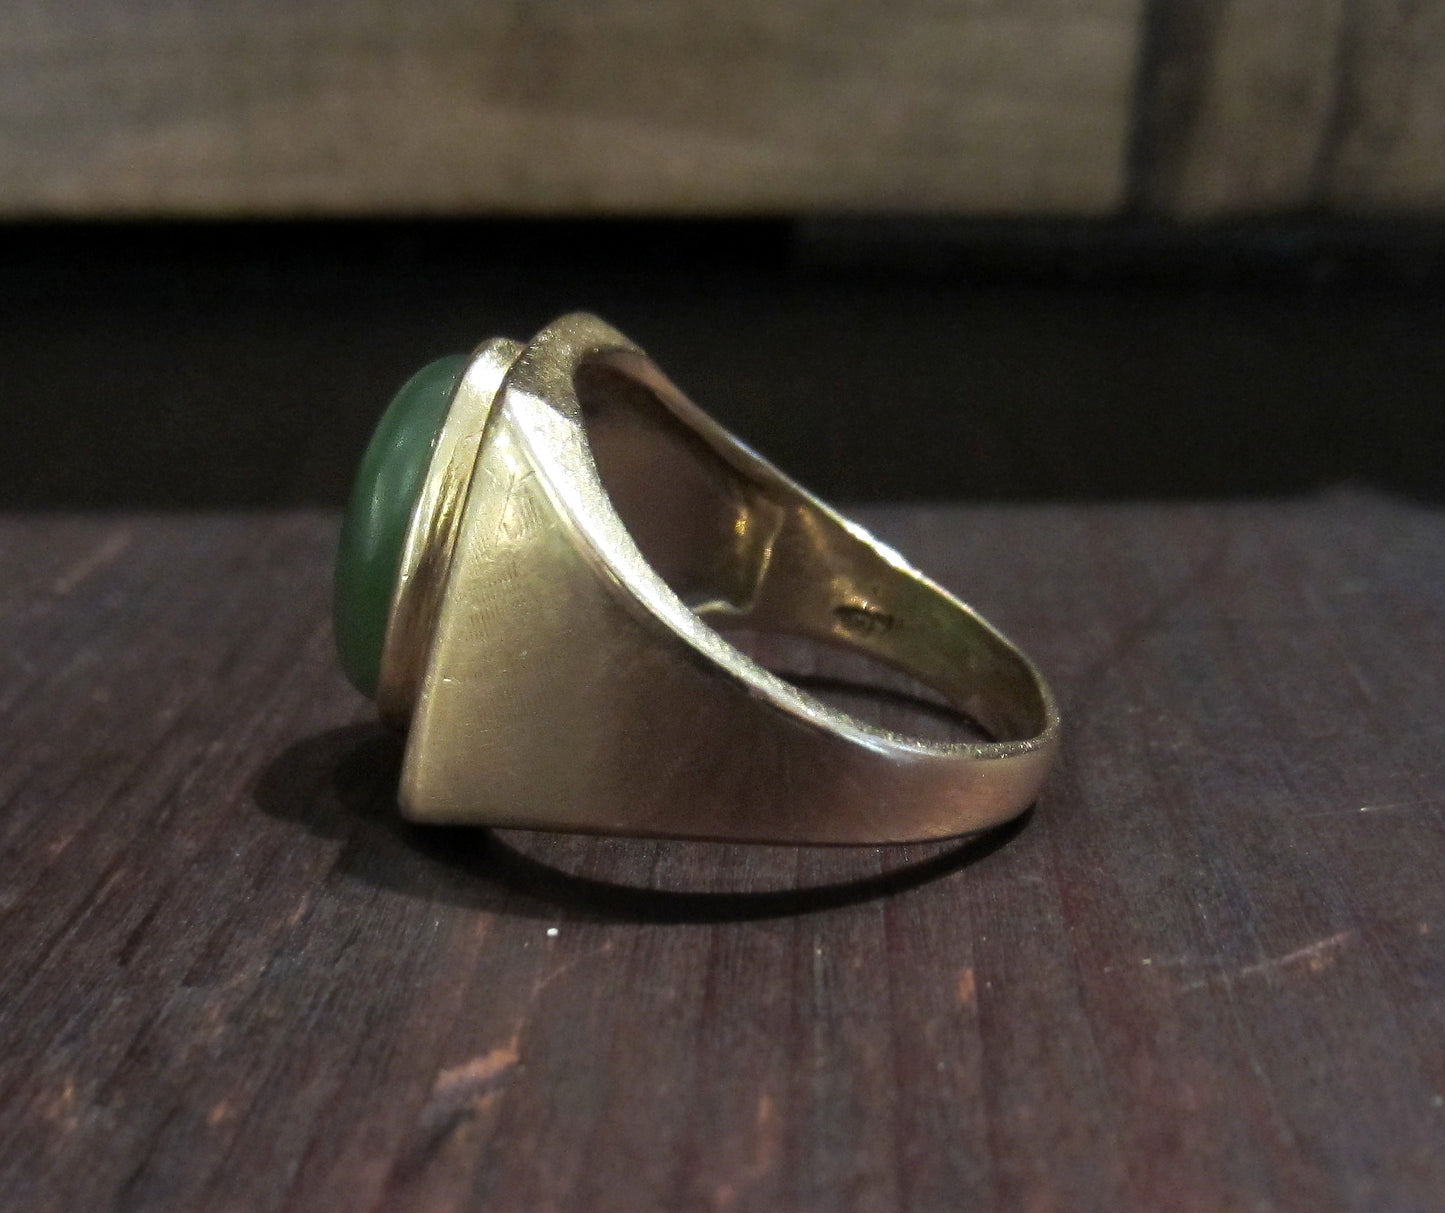 SOLD--Vintage Men's Jade Ring 14k c. 1970